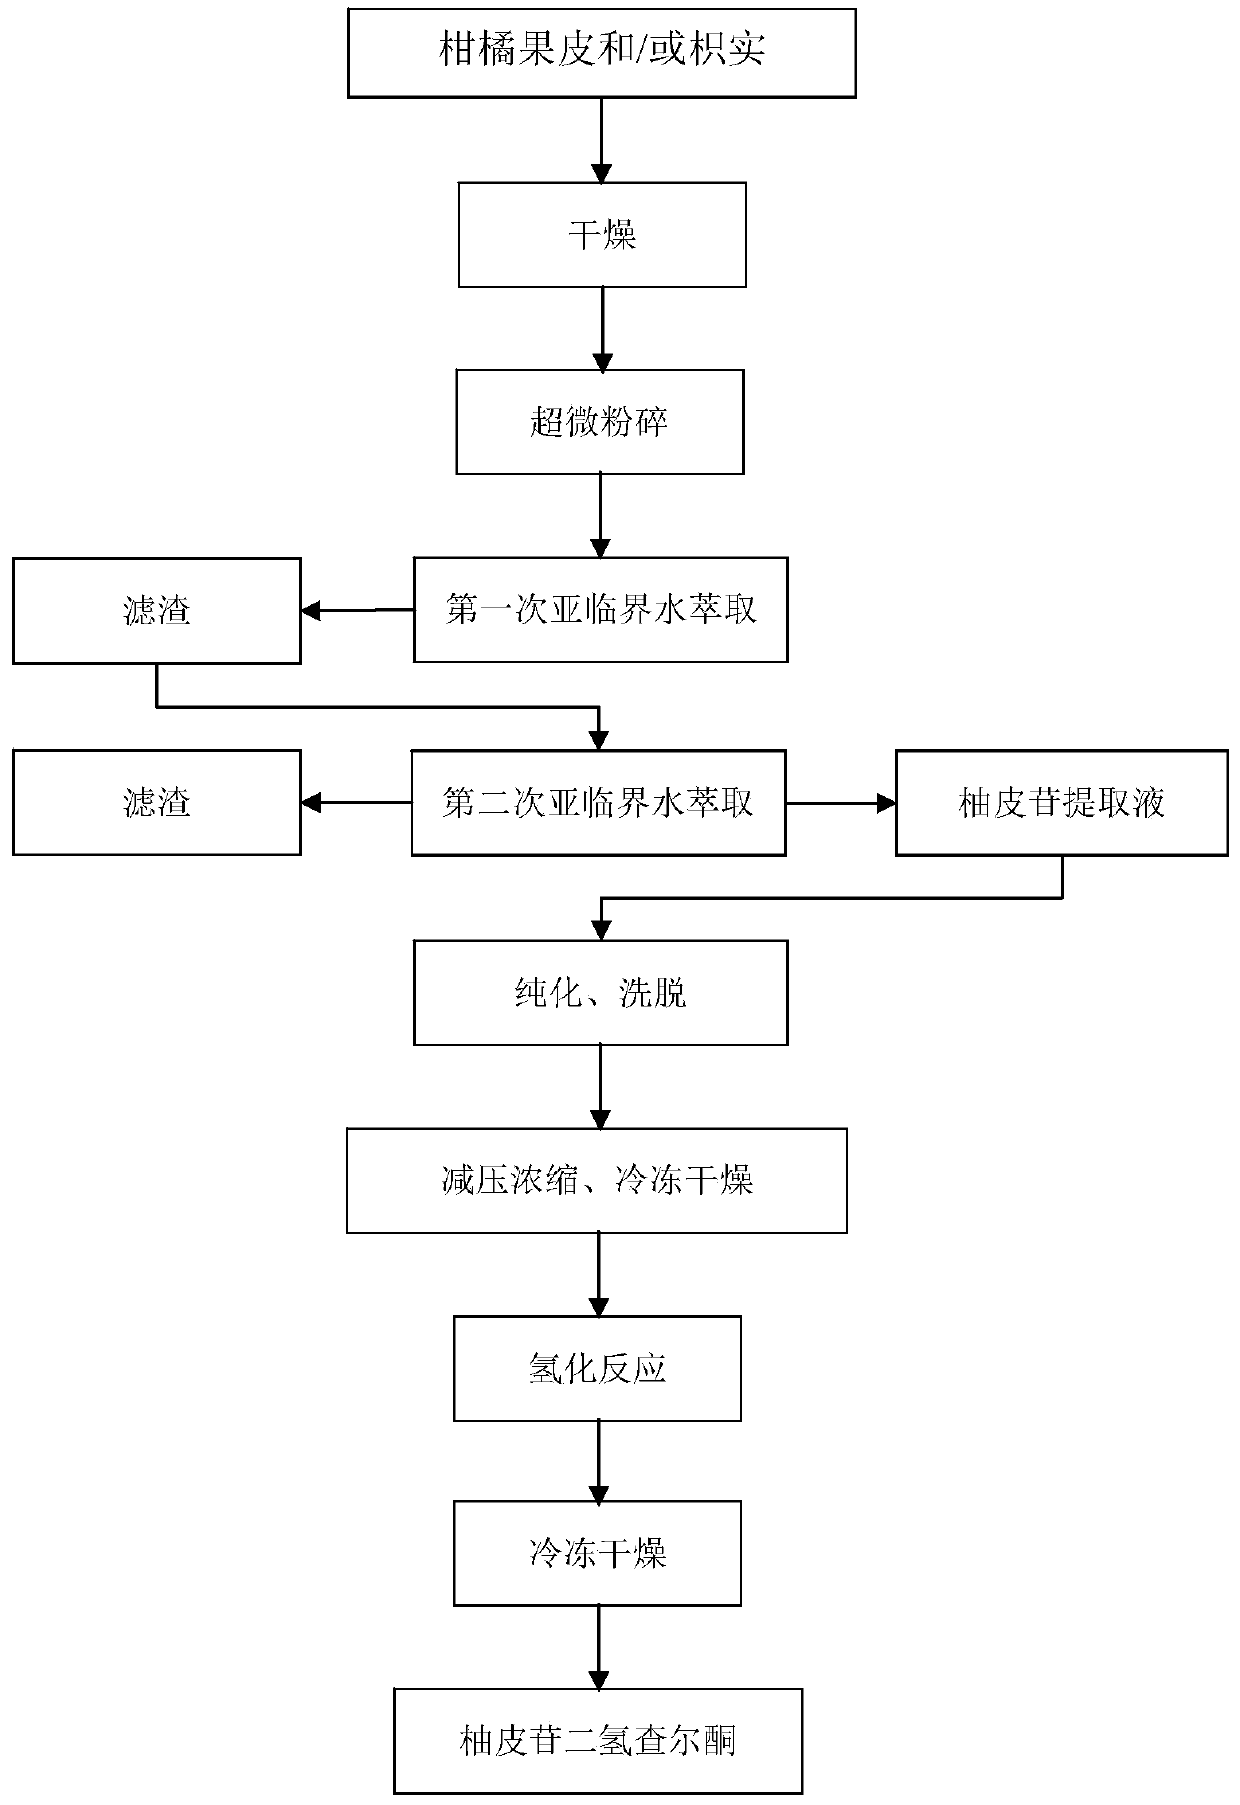 The preparation method of naringin dihydrochalcone